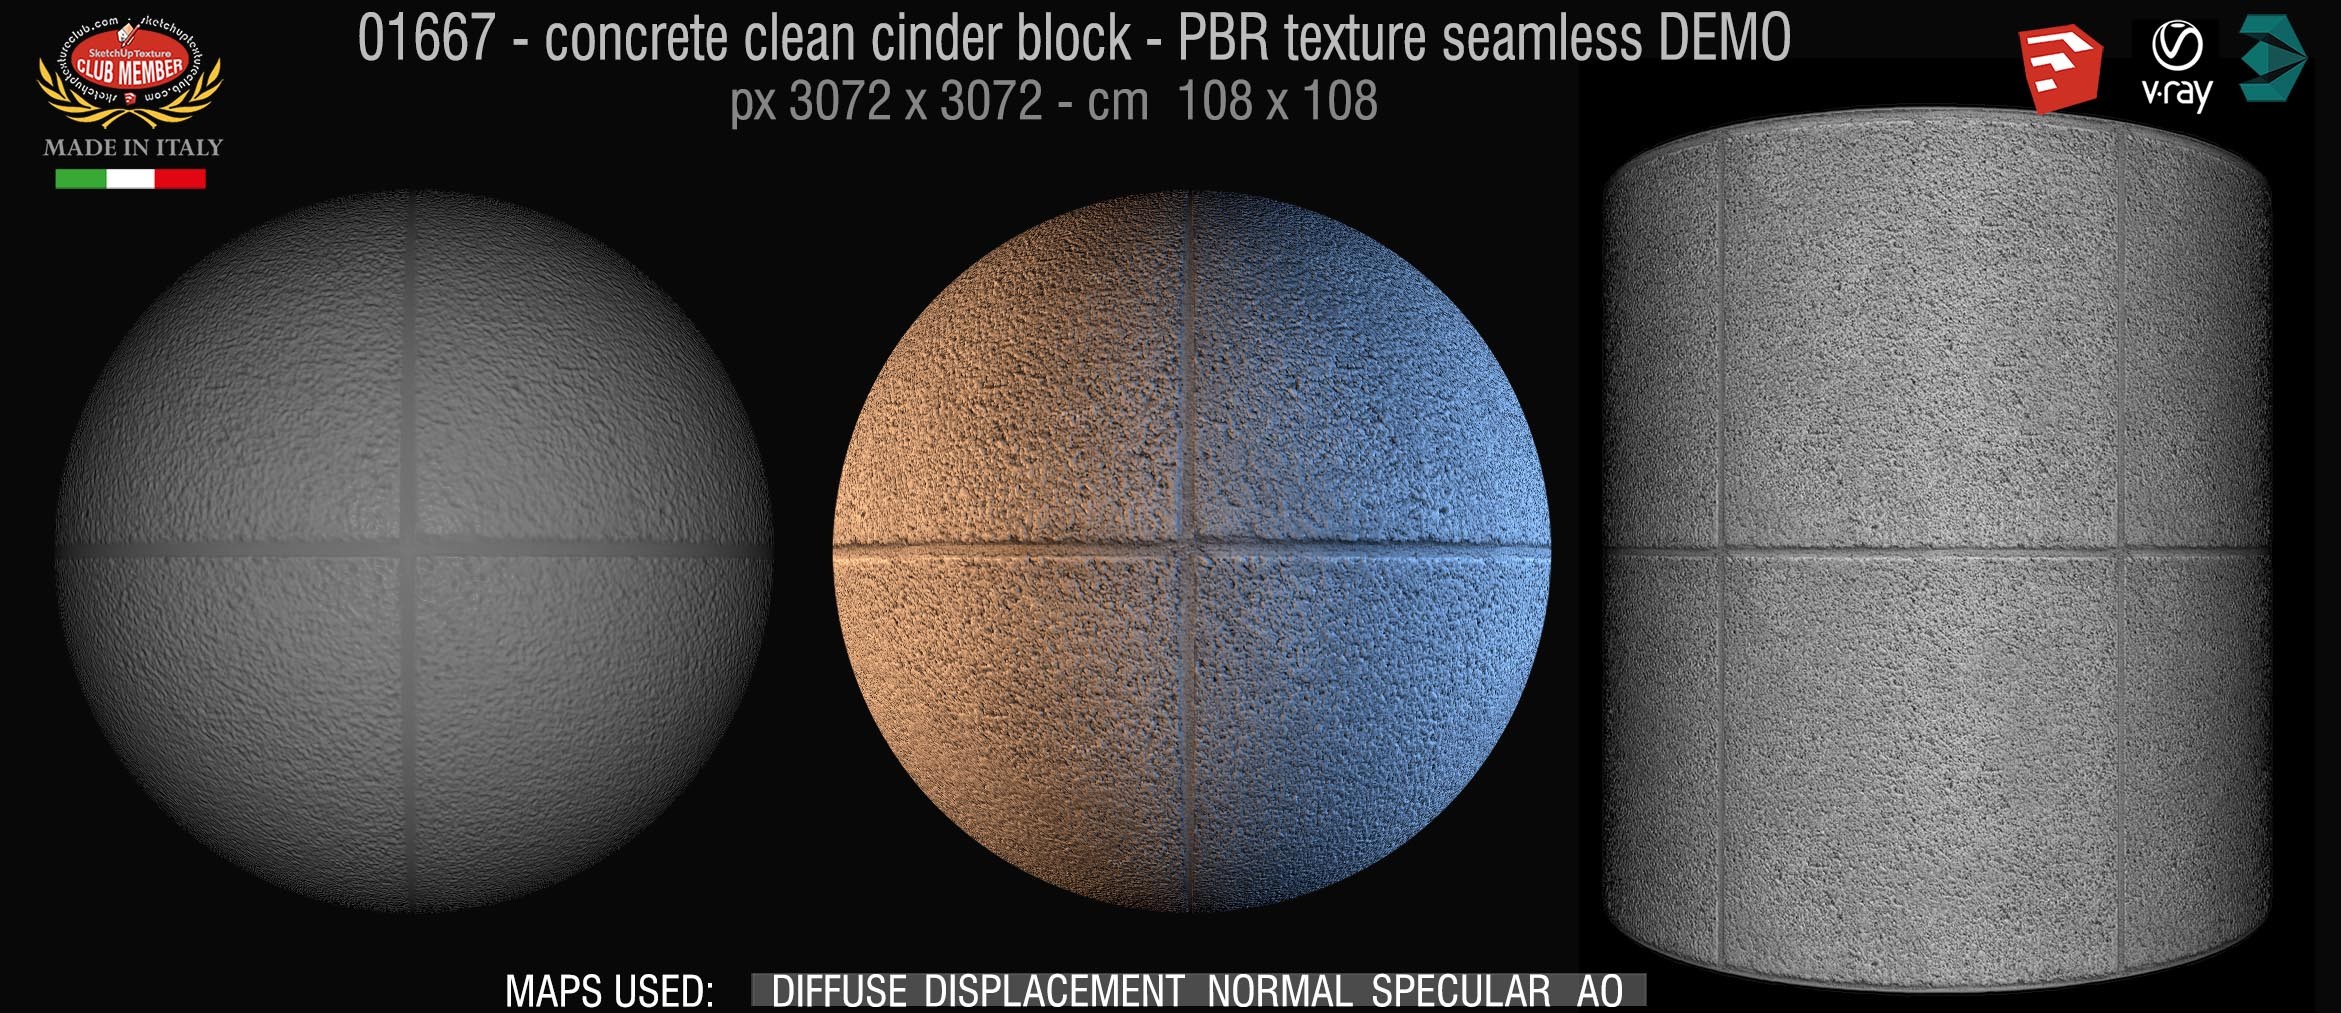 01667 concrete clean cinder block PBR texture seamless DEMO